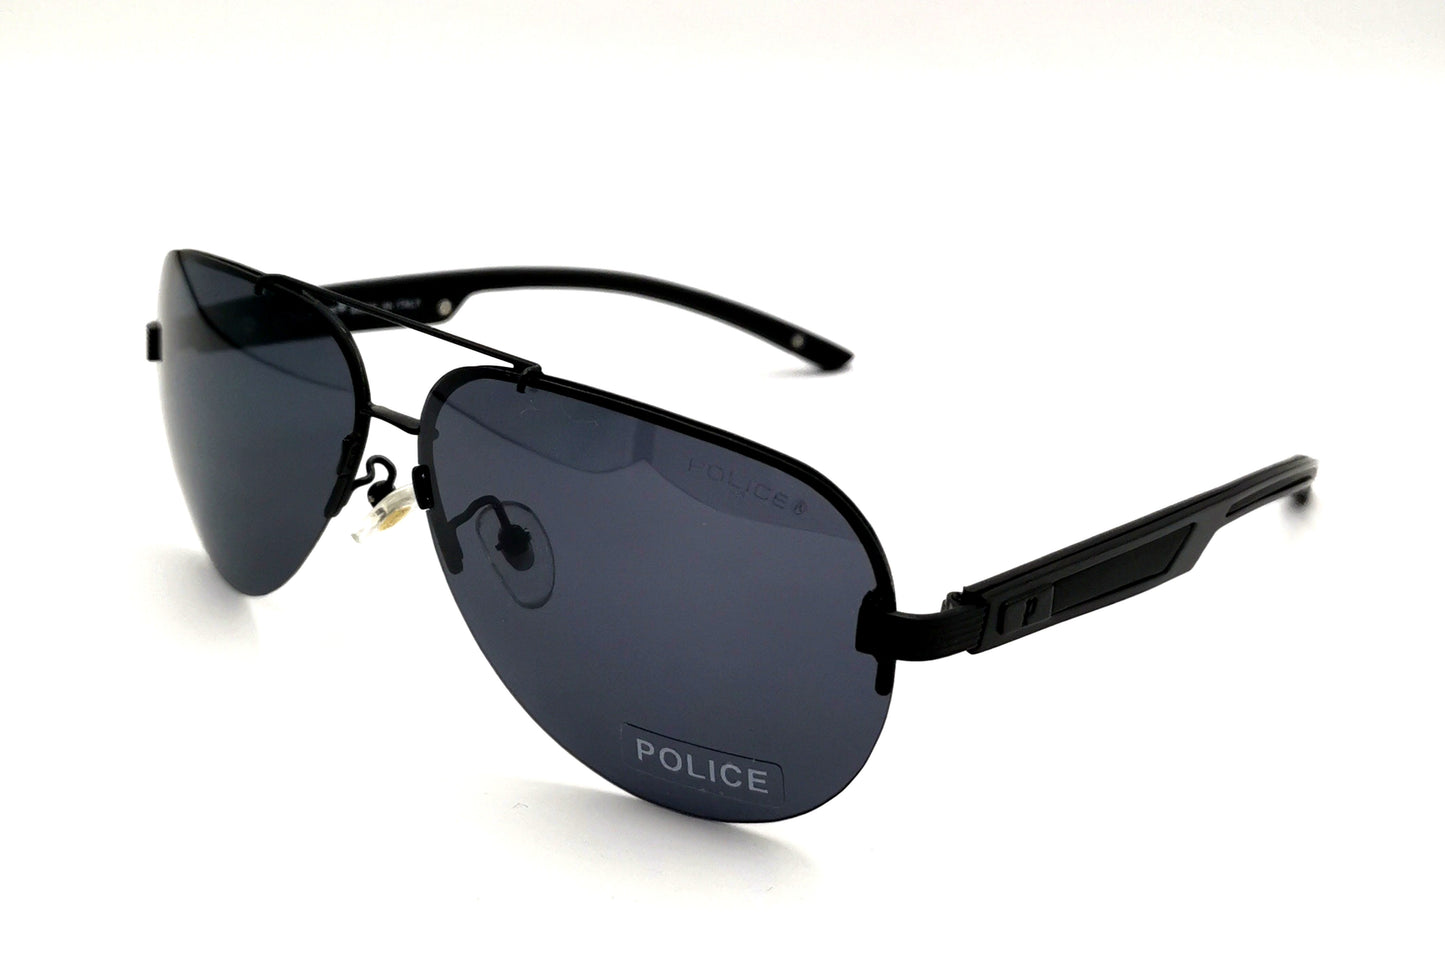 NS Deluxe - 6808 - Black - Sunglasses